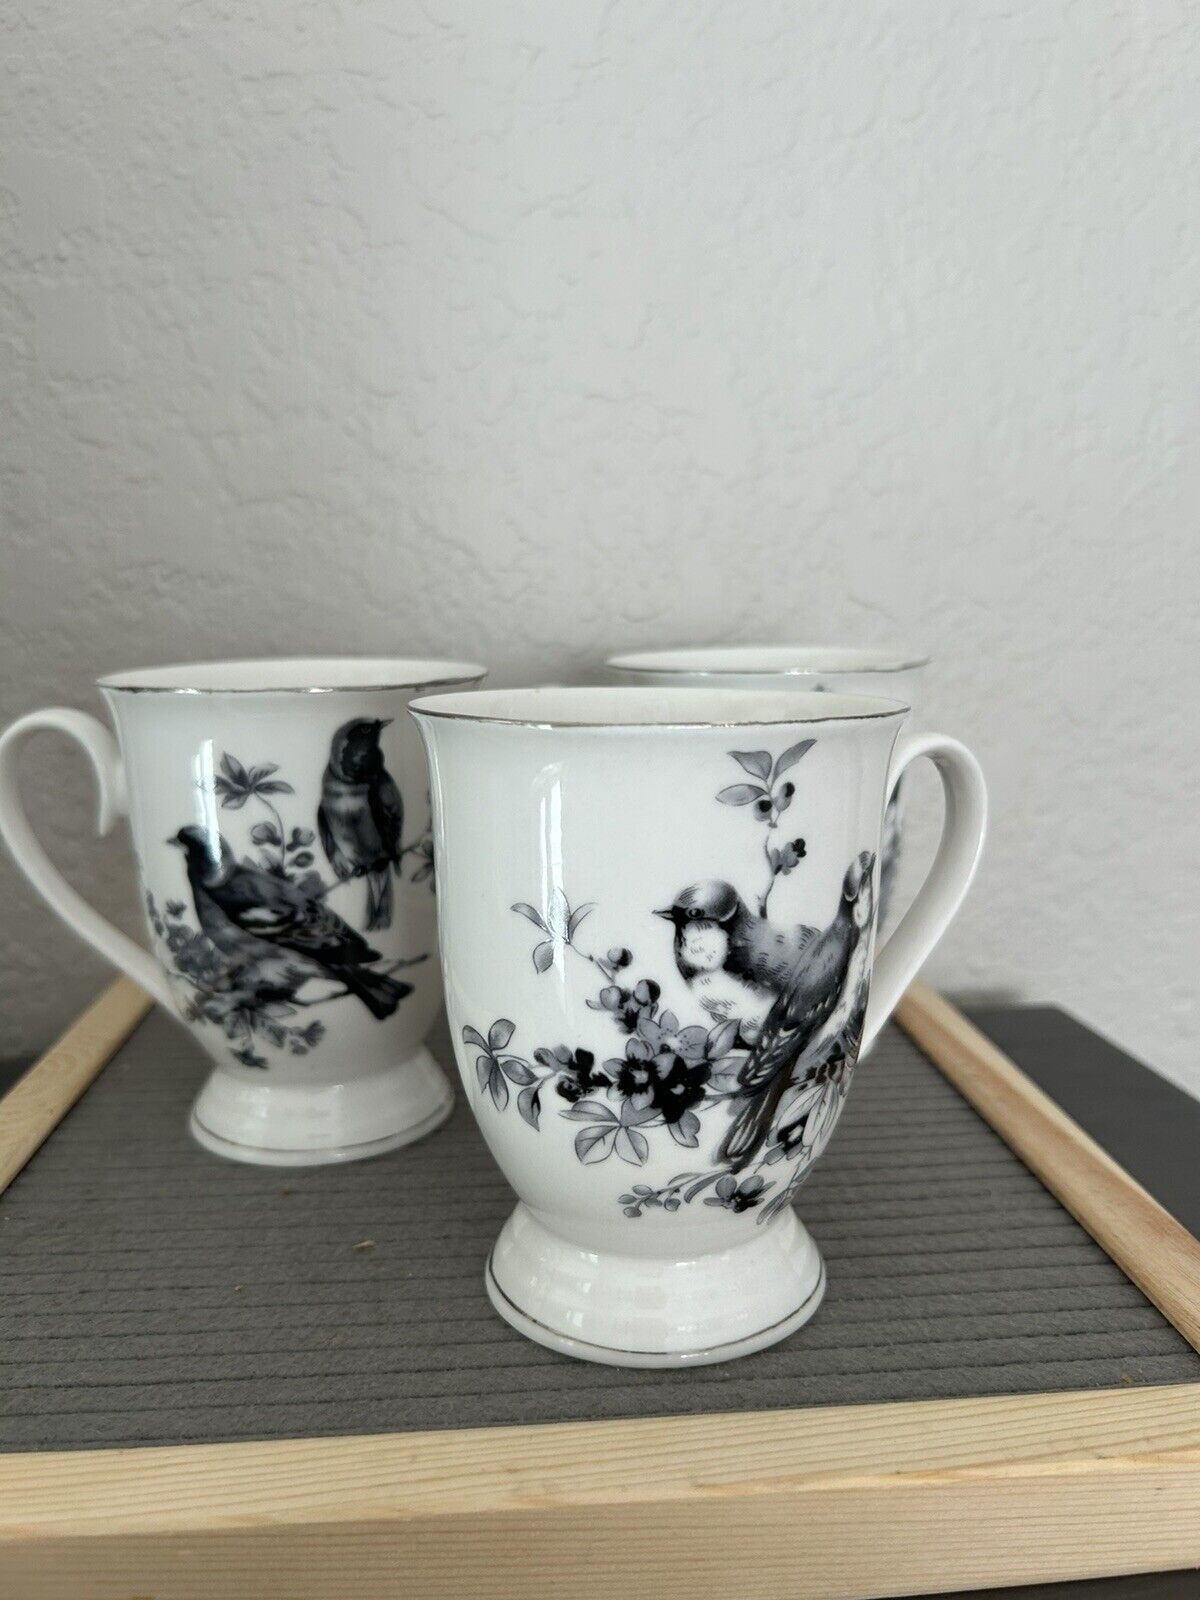 3 Grace’s Teaware pedestal porcelain coffee or tea mug/ cup